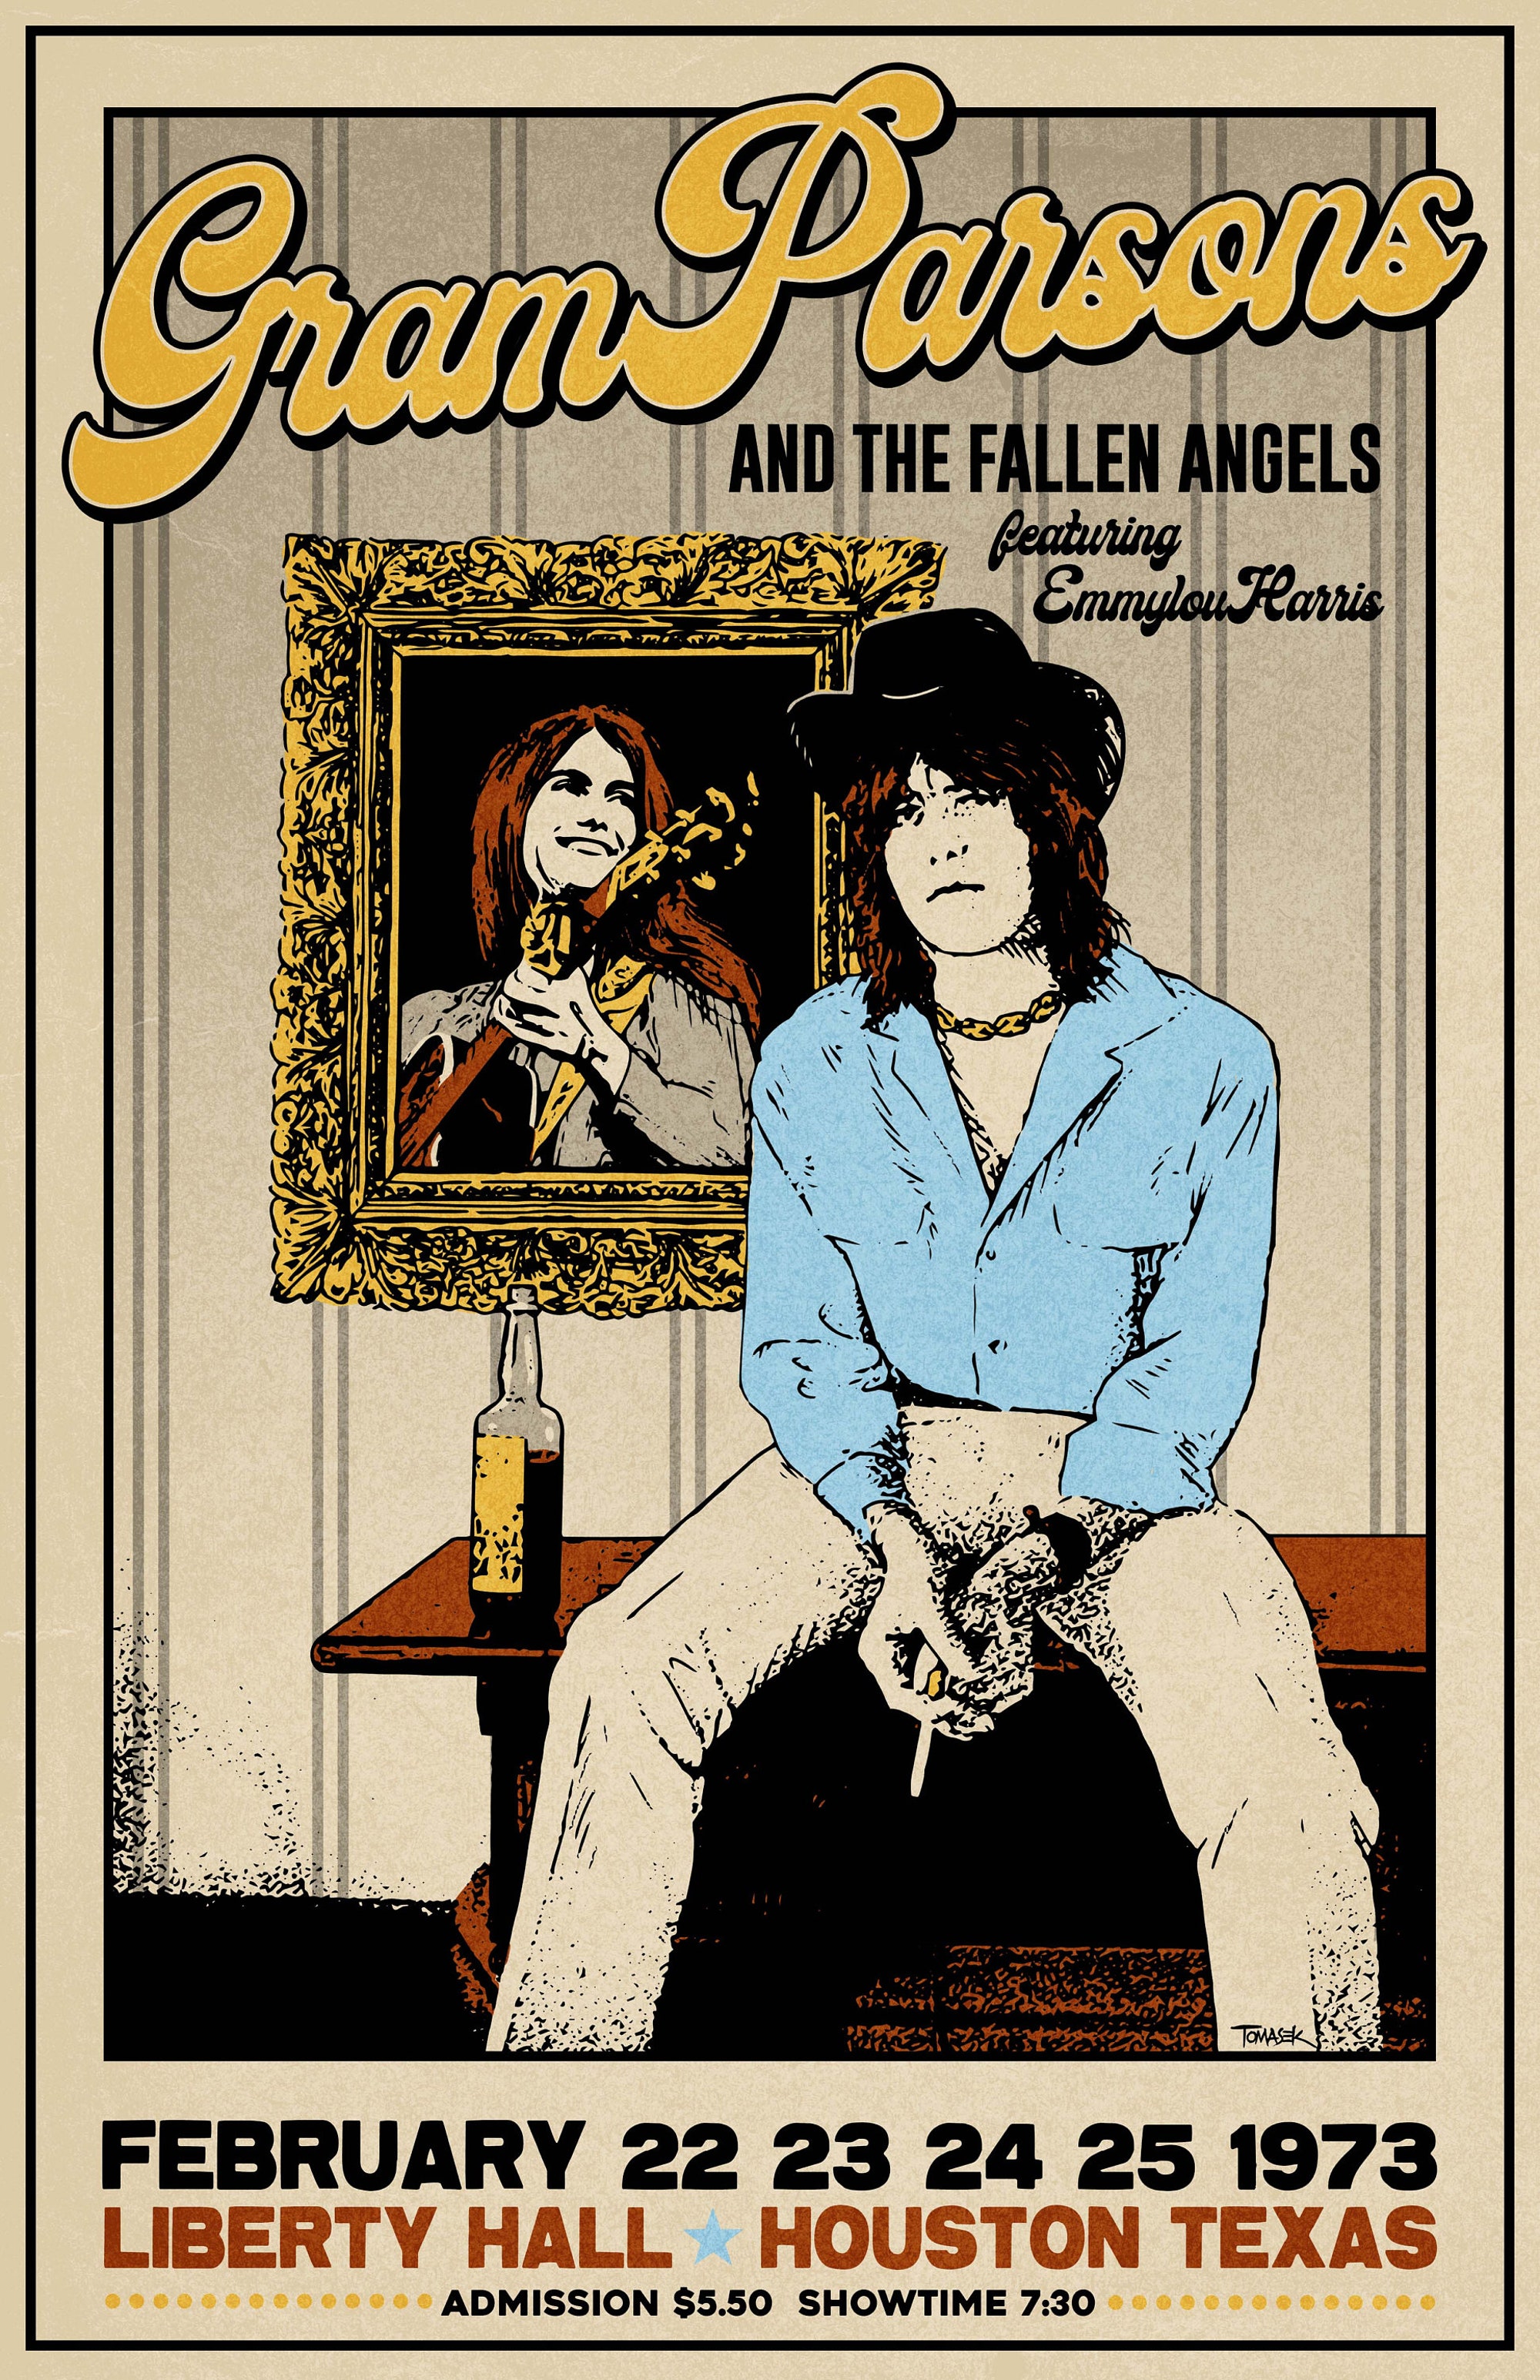 Gram Parsons 1973 Concert Poster